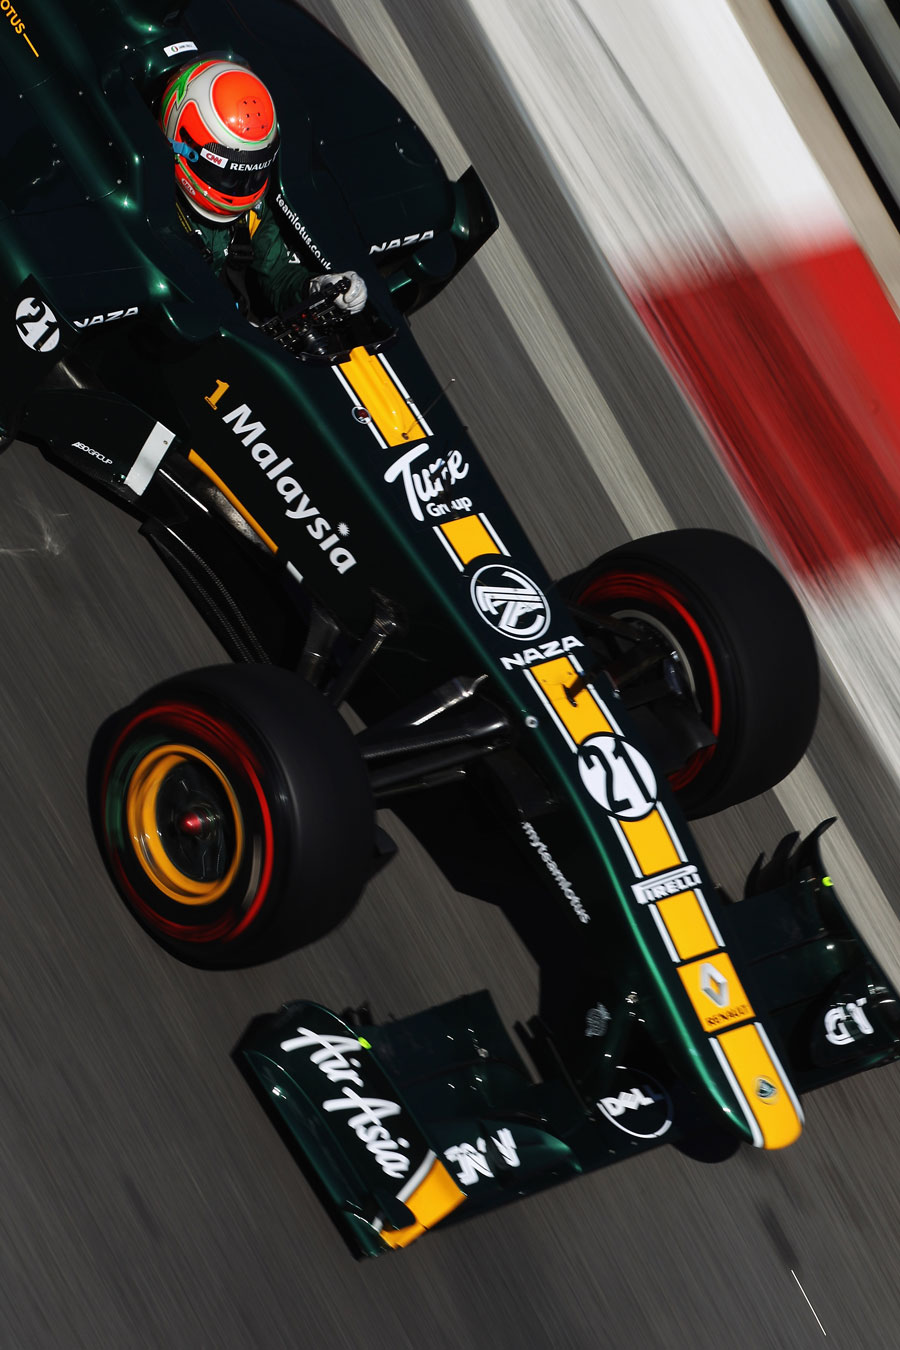 Jarno Trulli on track in the Lotus